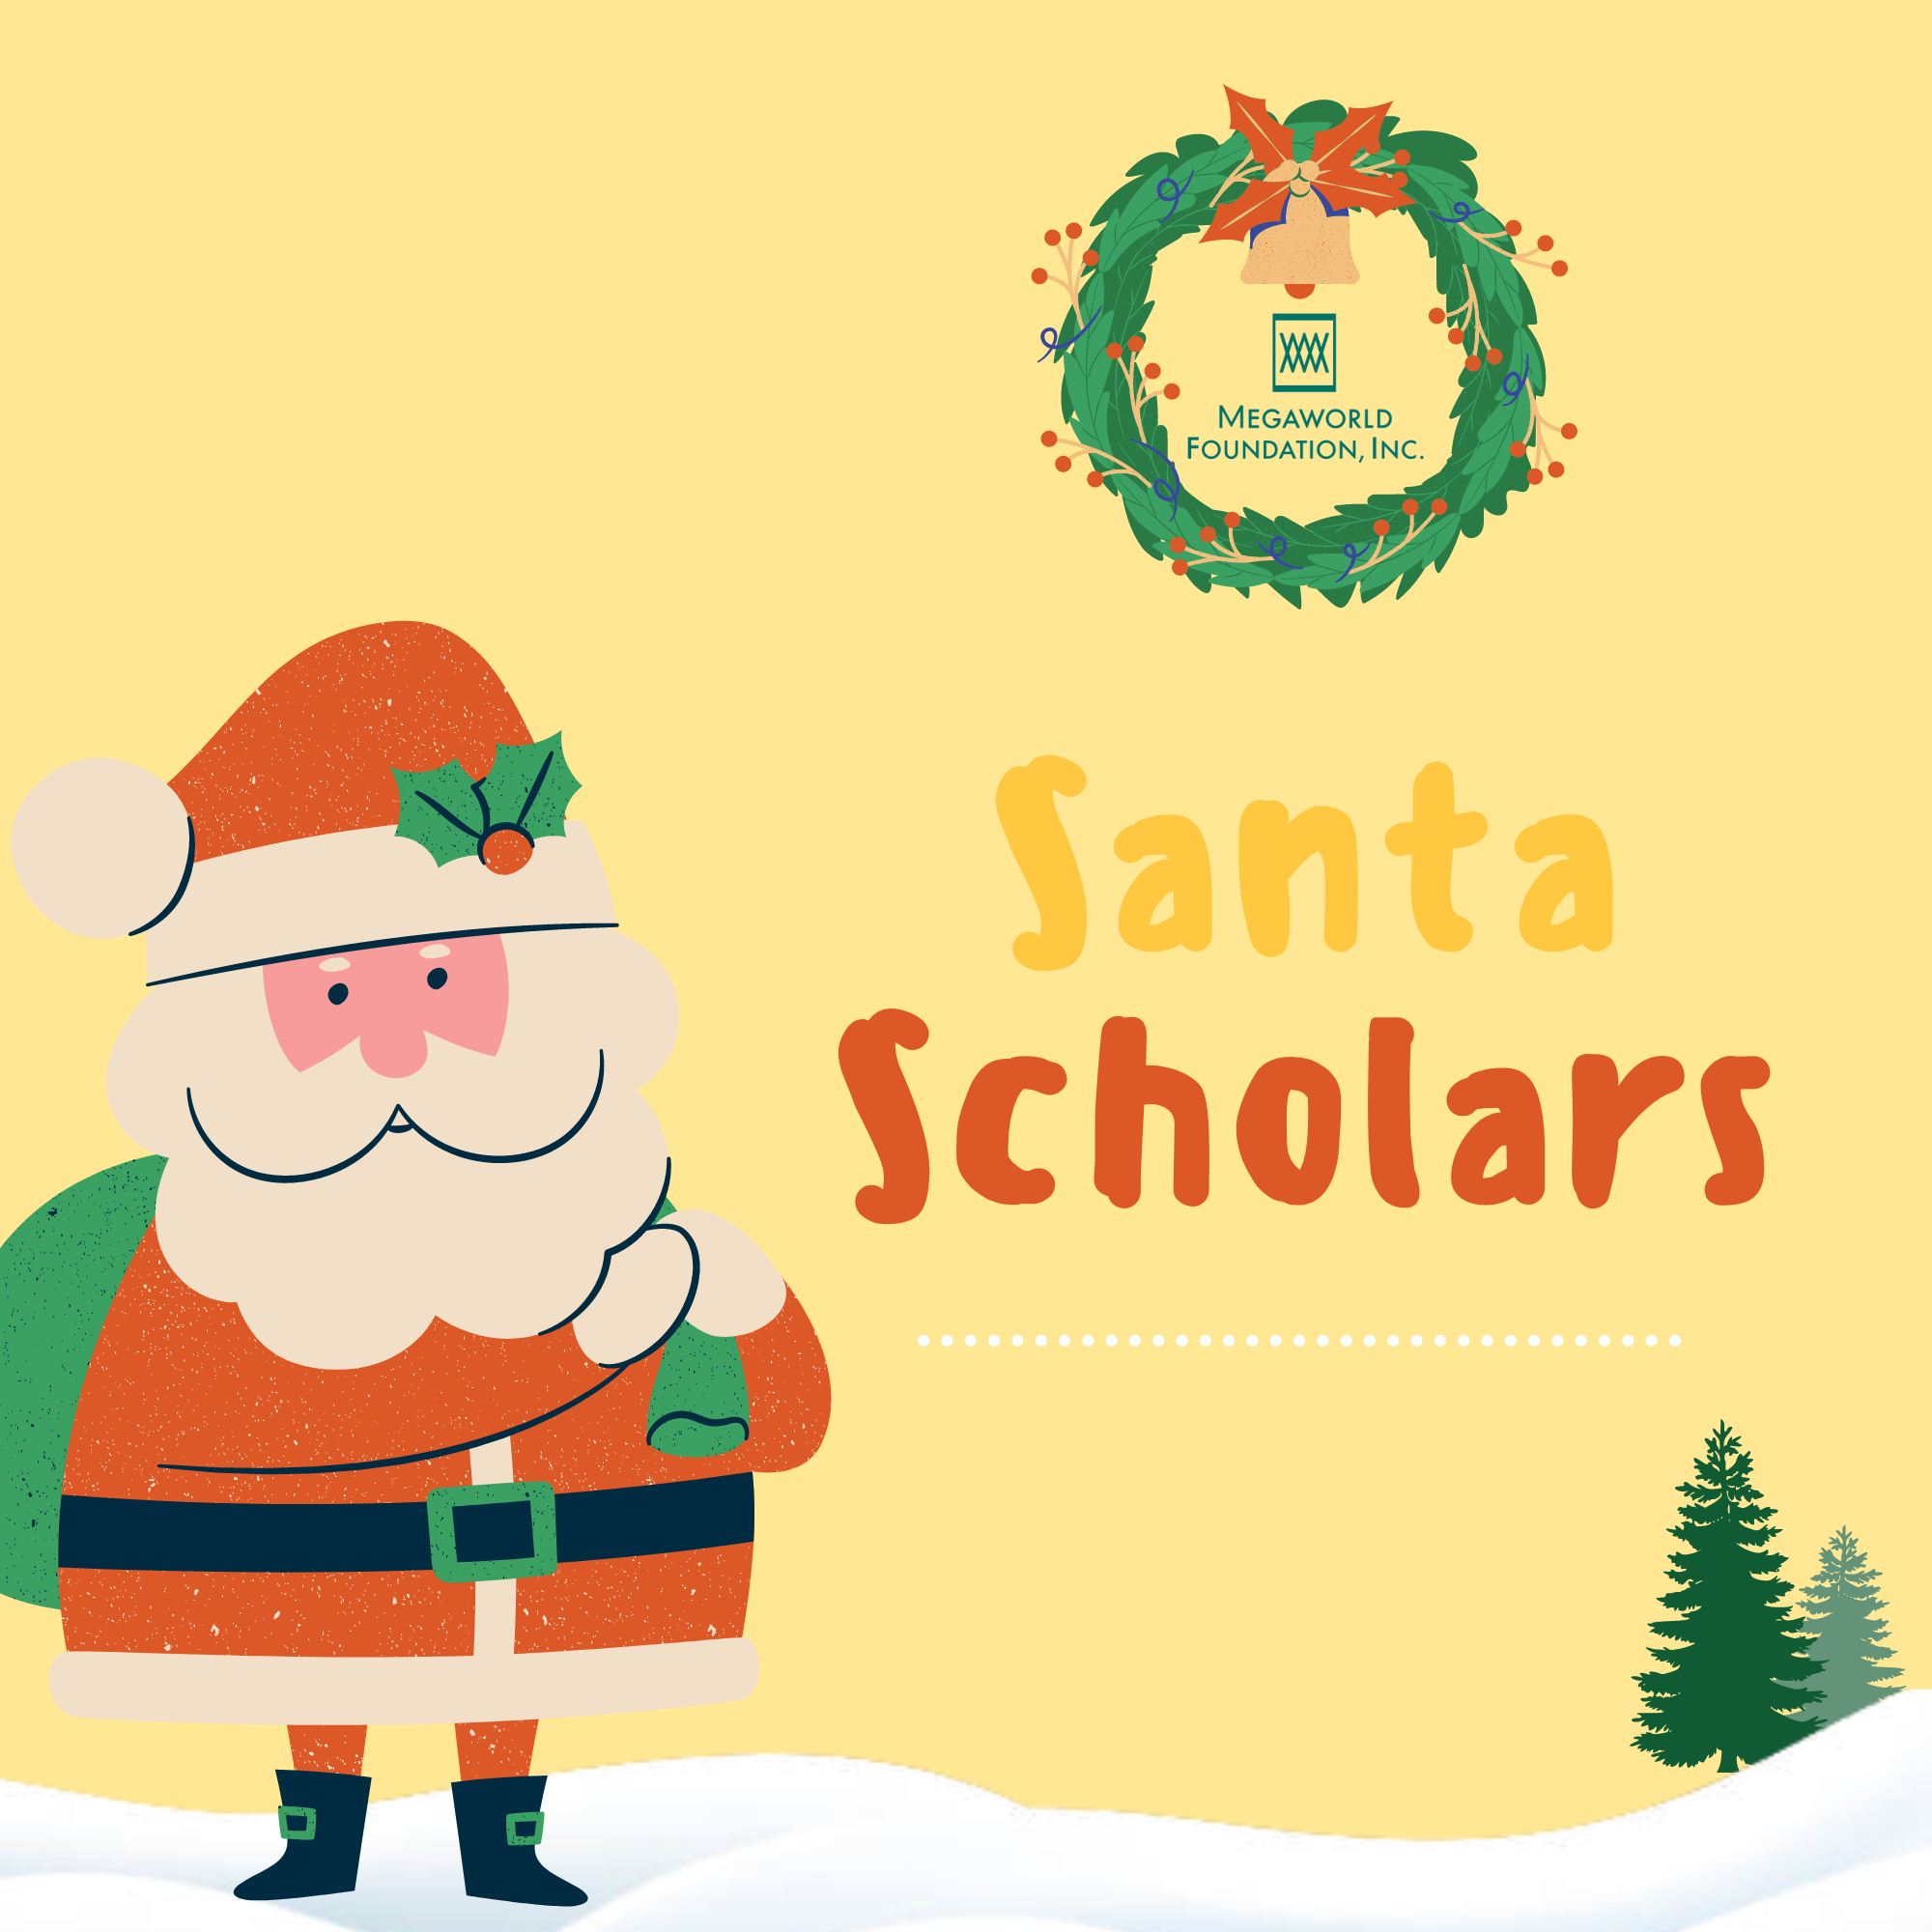 Santa Scholars